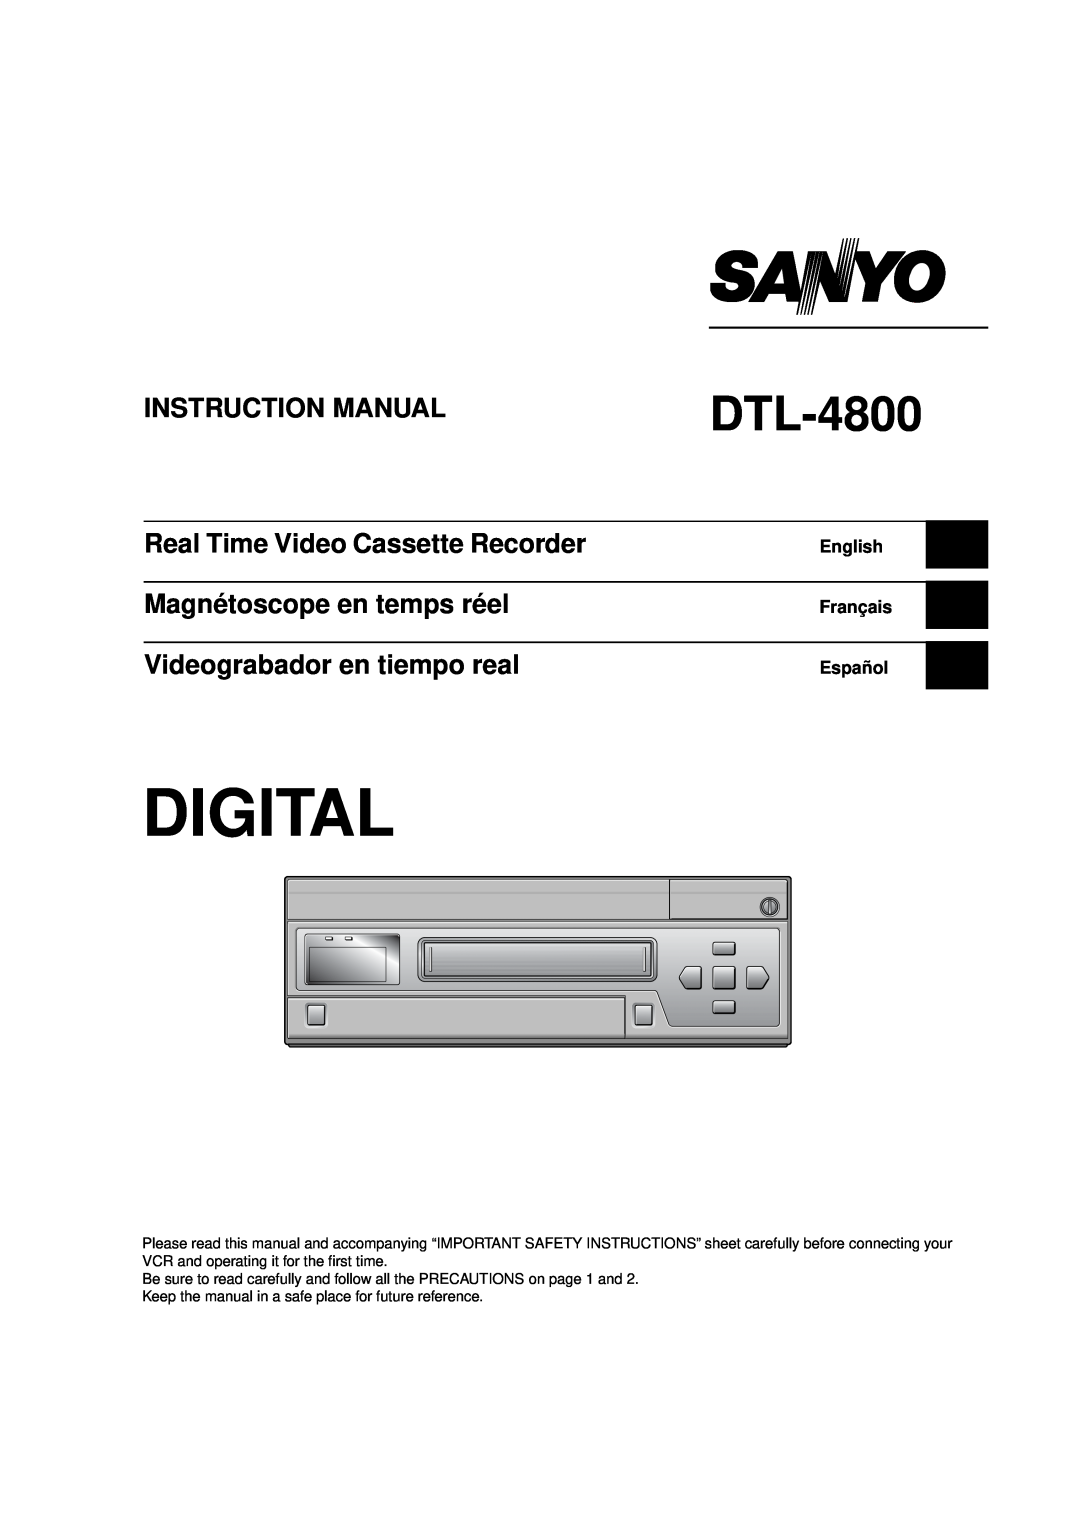 Sanyo RD2QD/NA instruction manual English Français Español, Digital, DTL-4800, Instruction Manual 